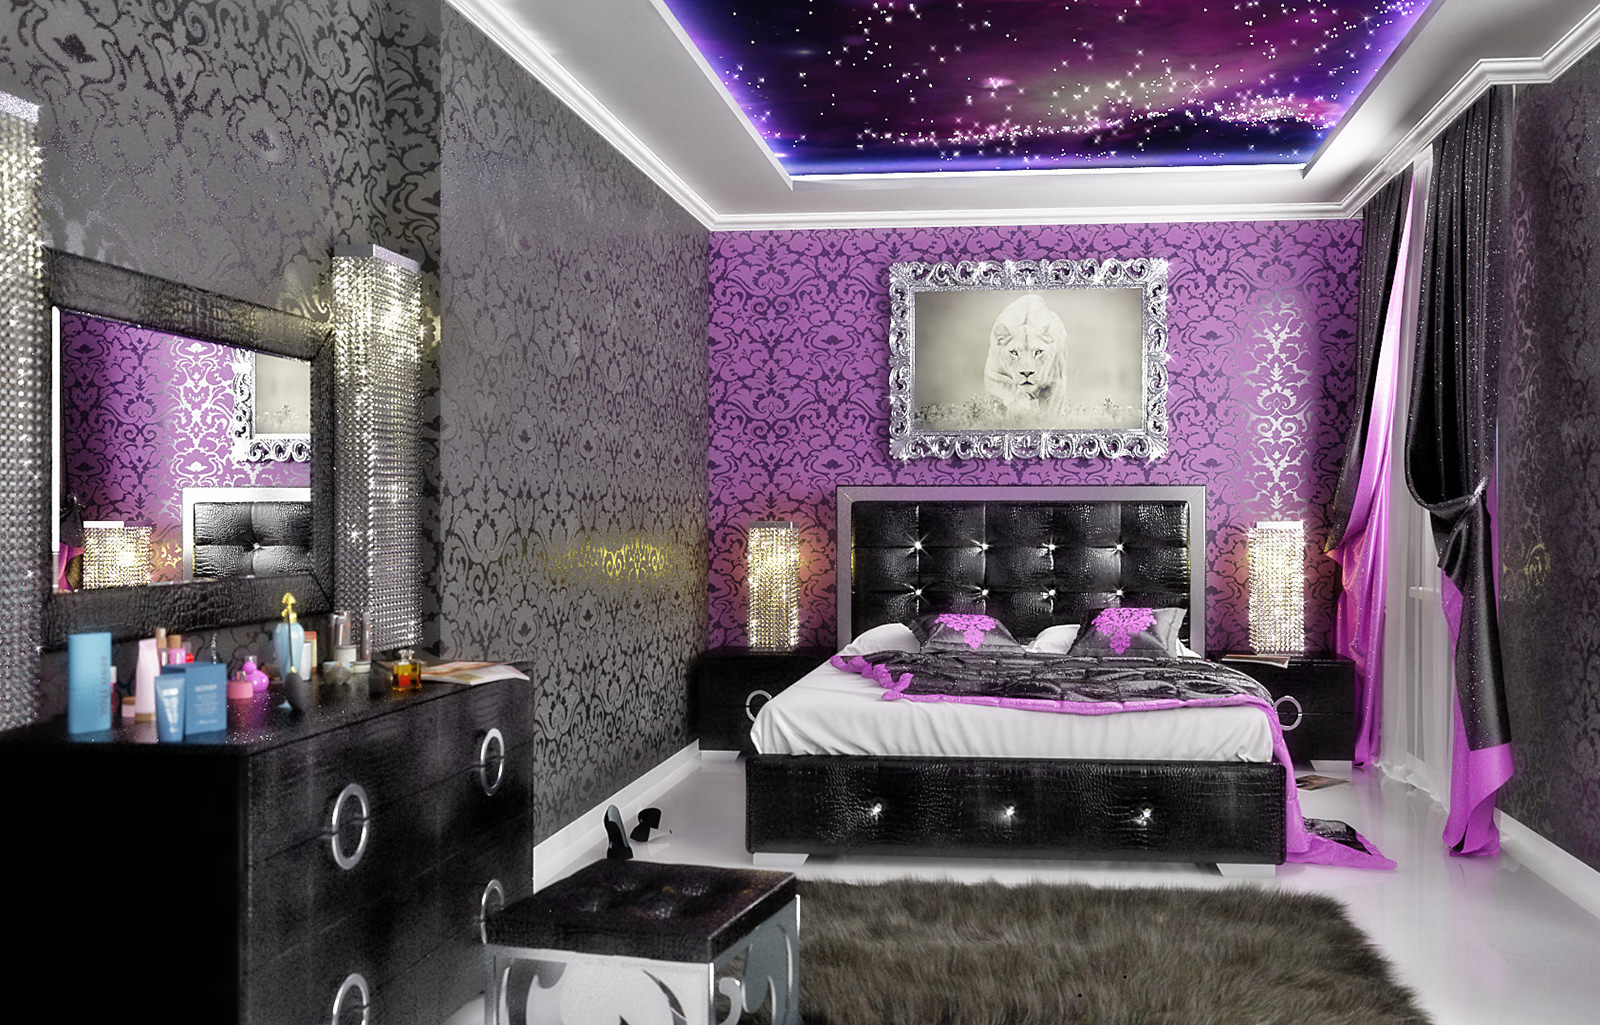 пурпурна фотографија спаваће собе